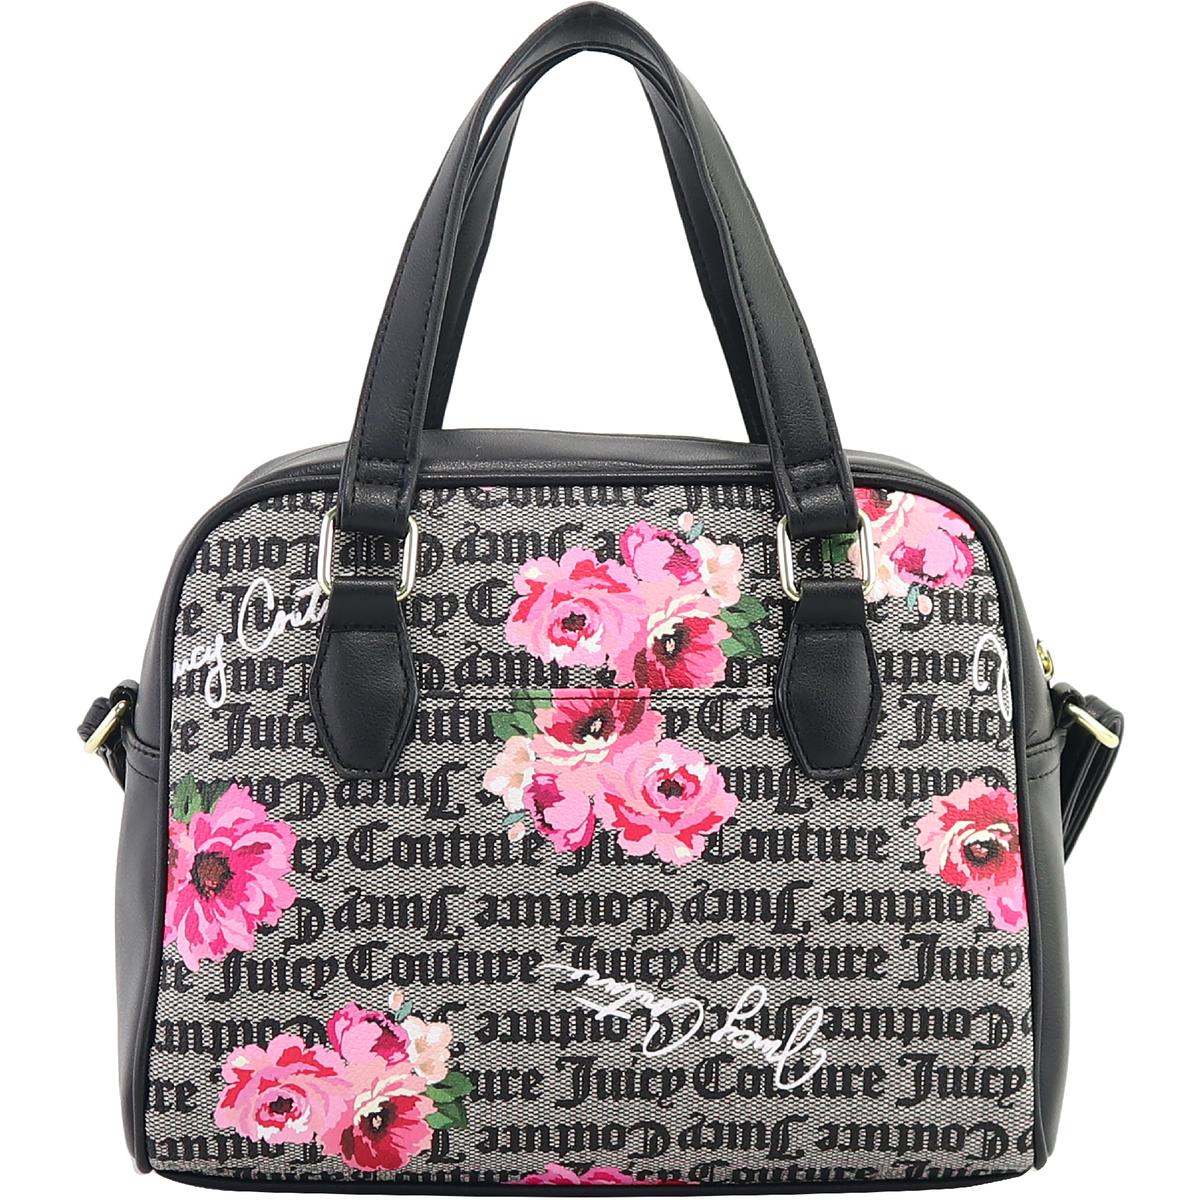 Microfiber PU Leather King Dare Queen Crown Women Fashion Handbags Tote Bag Shoulder Bag Top Handle Satchel